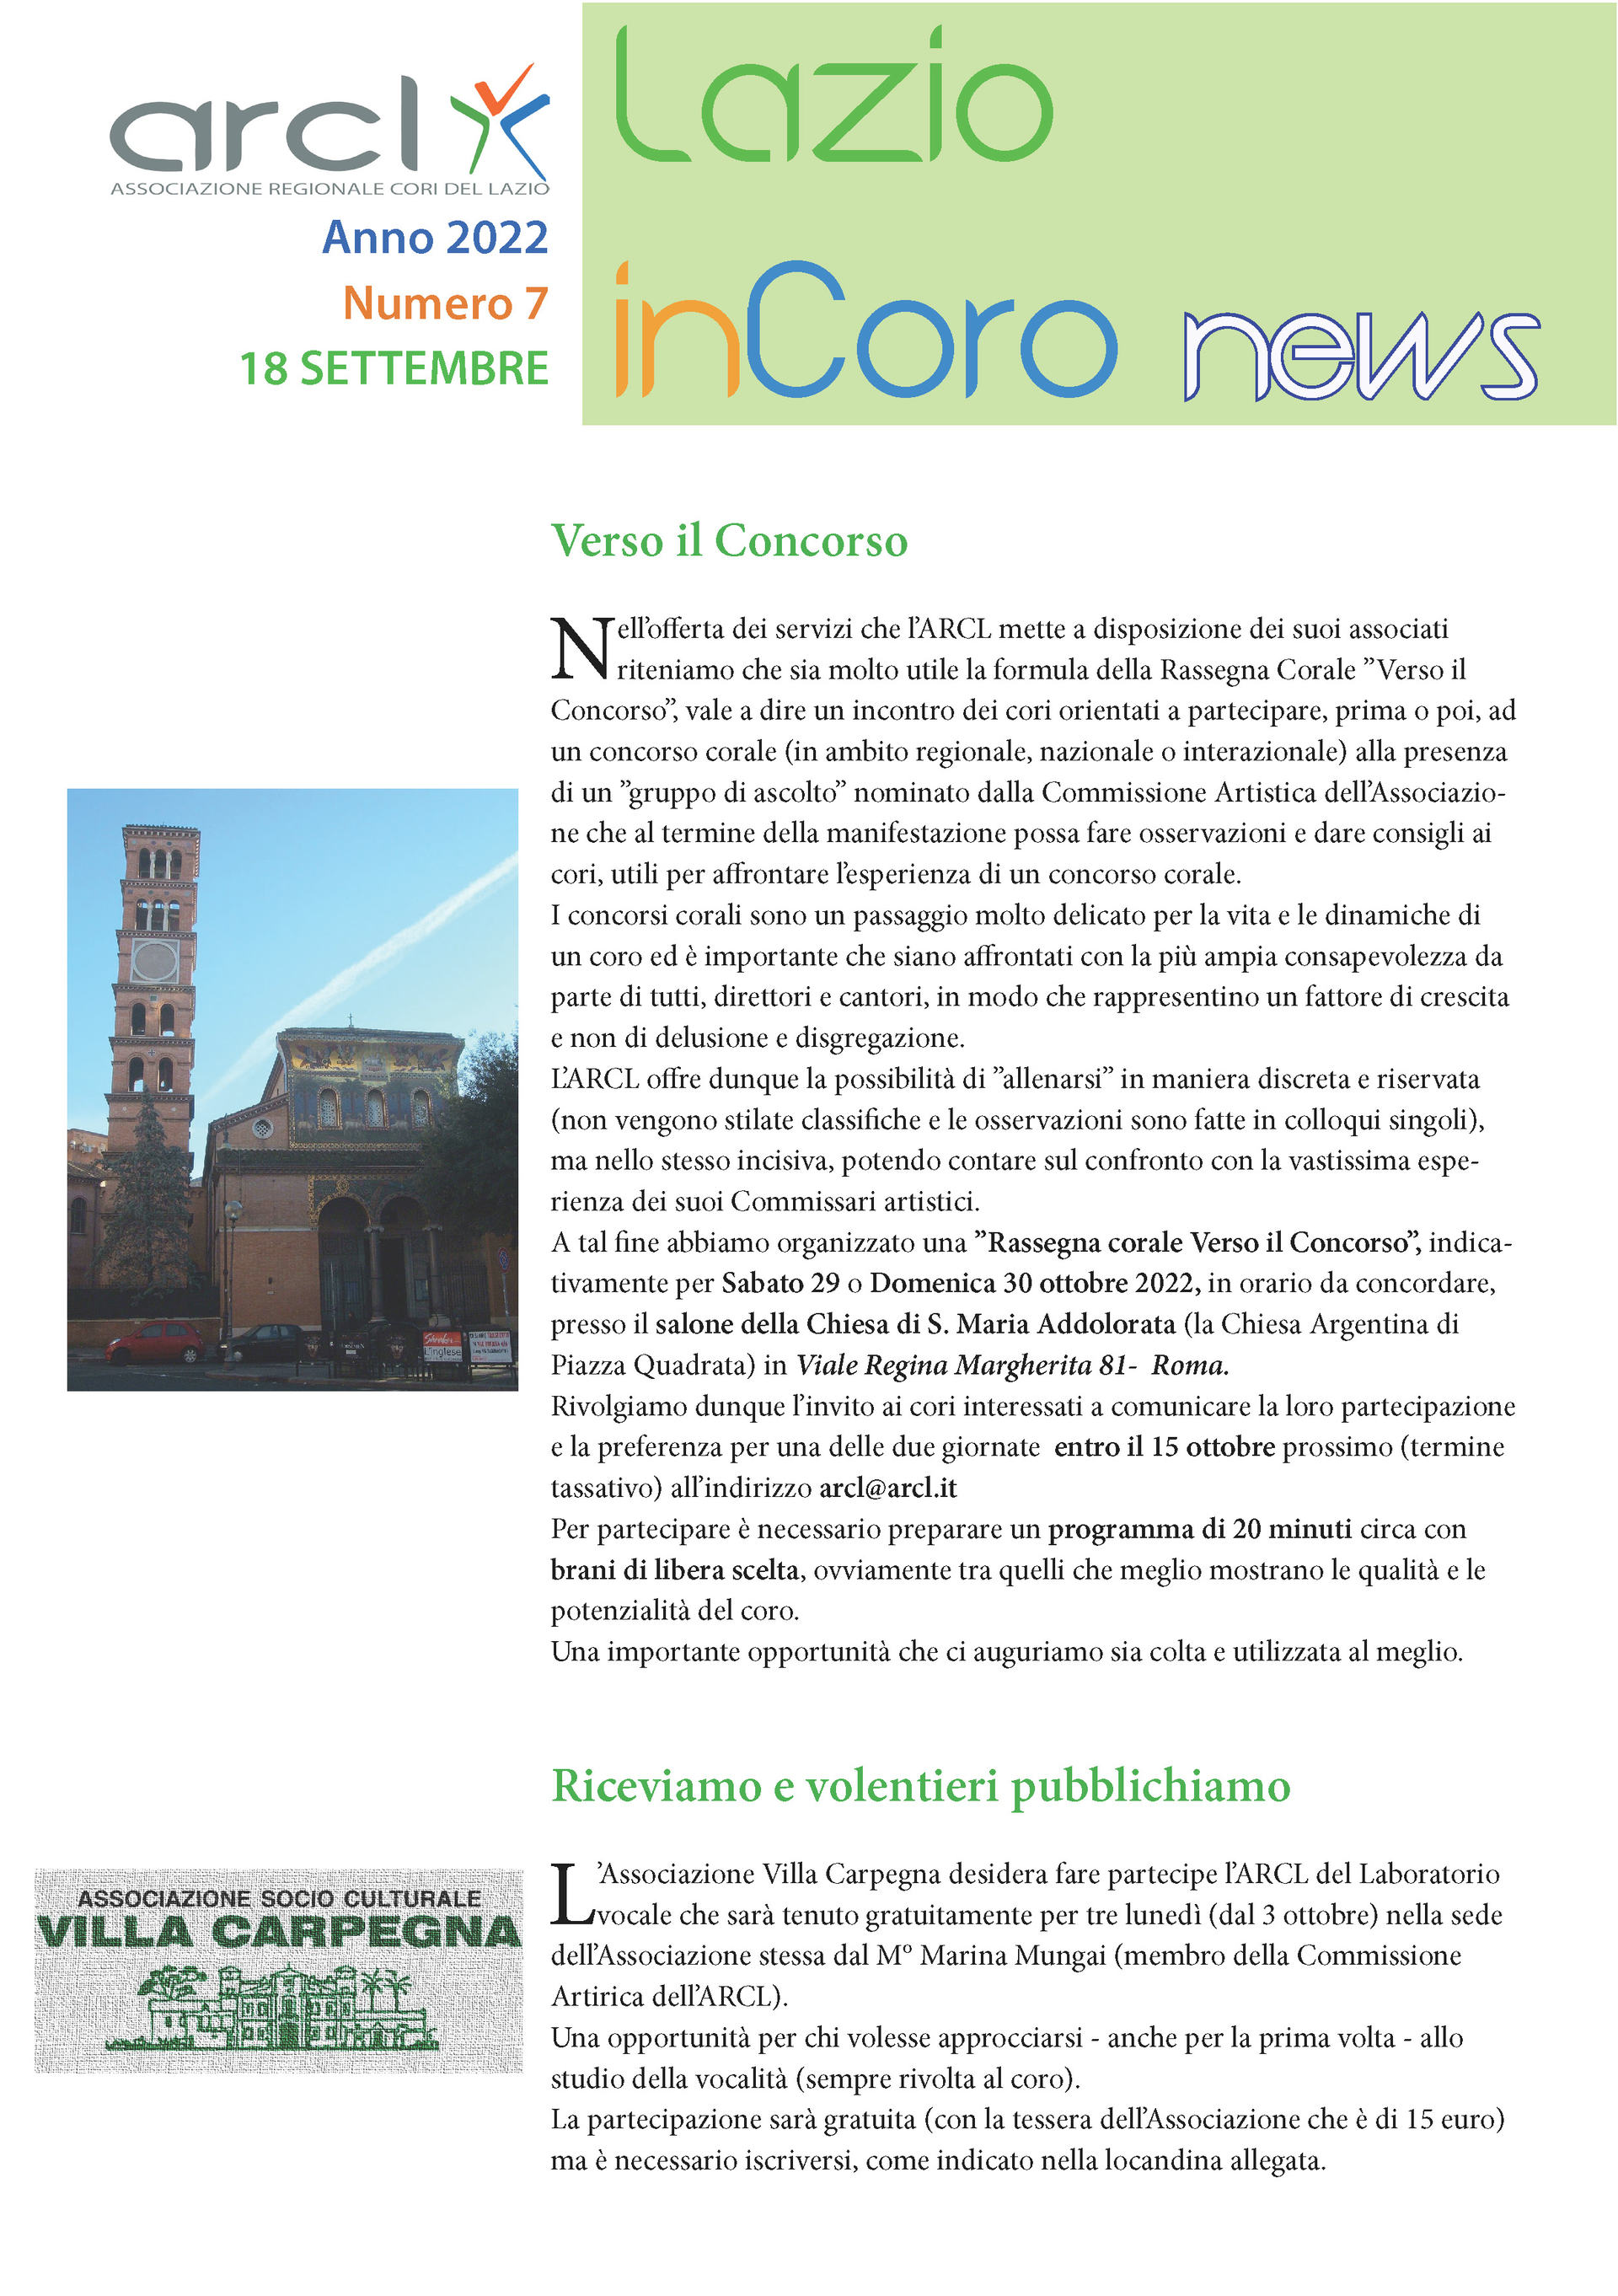 Lazioincoro News n. 7 - 18 sett 2022